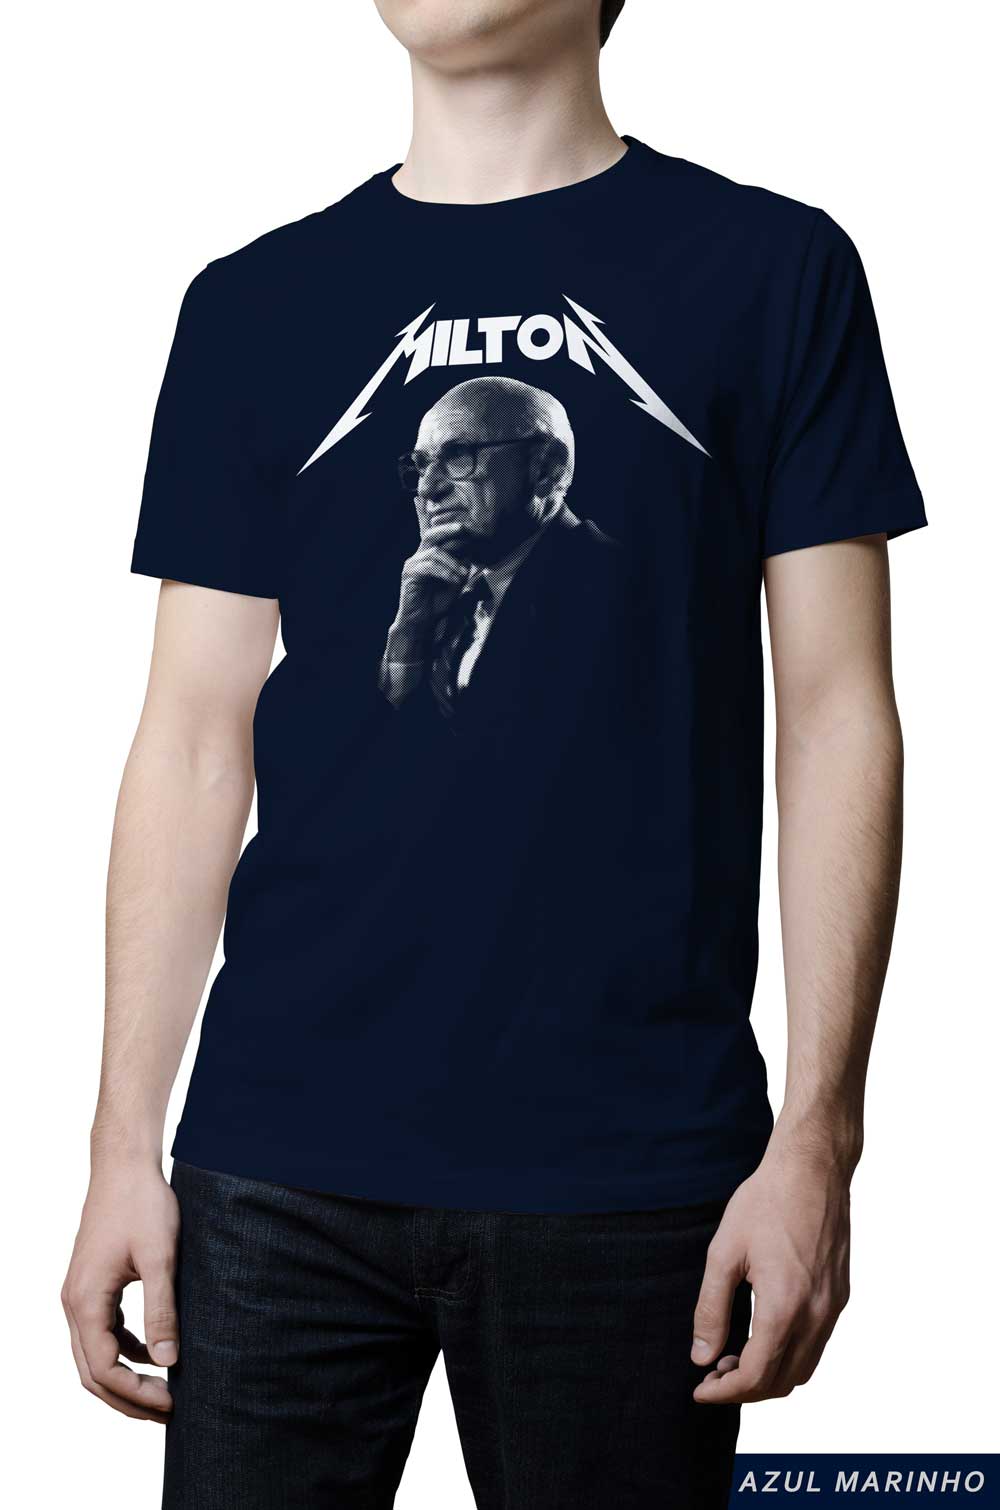 Camiseta - Milton Friedman (Metal)